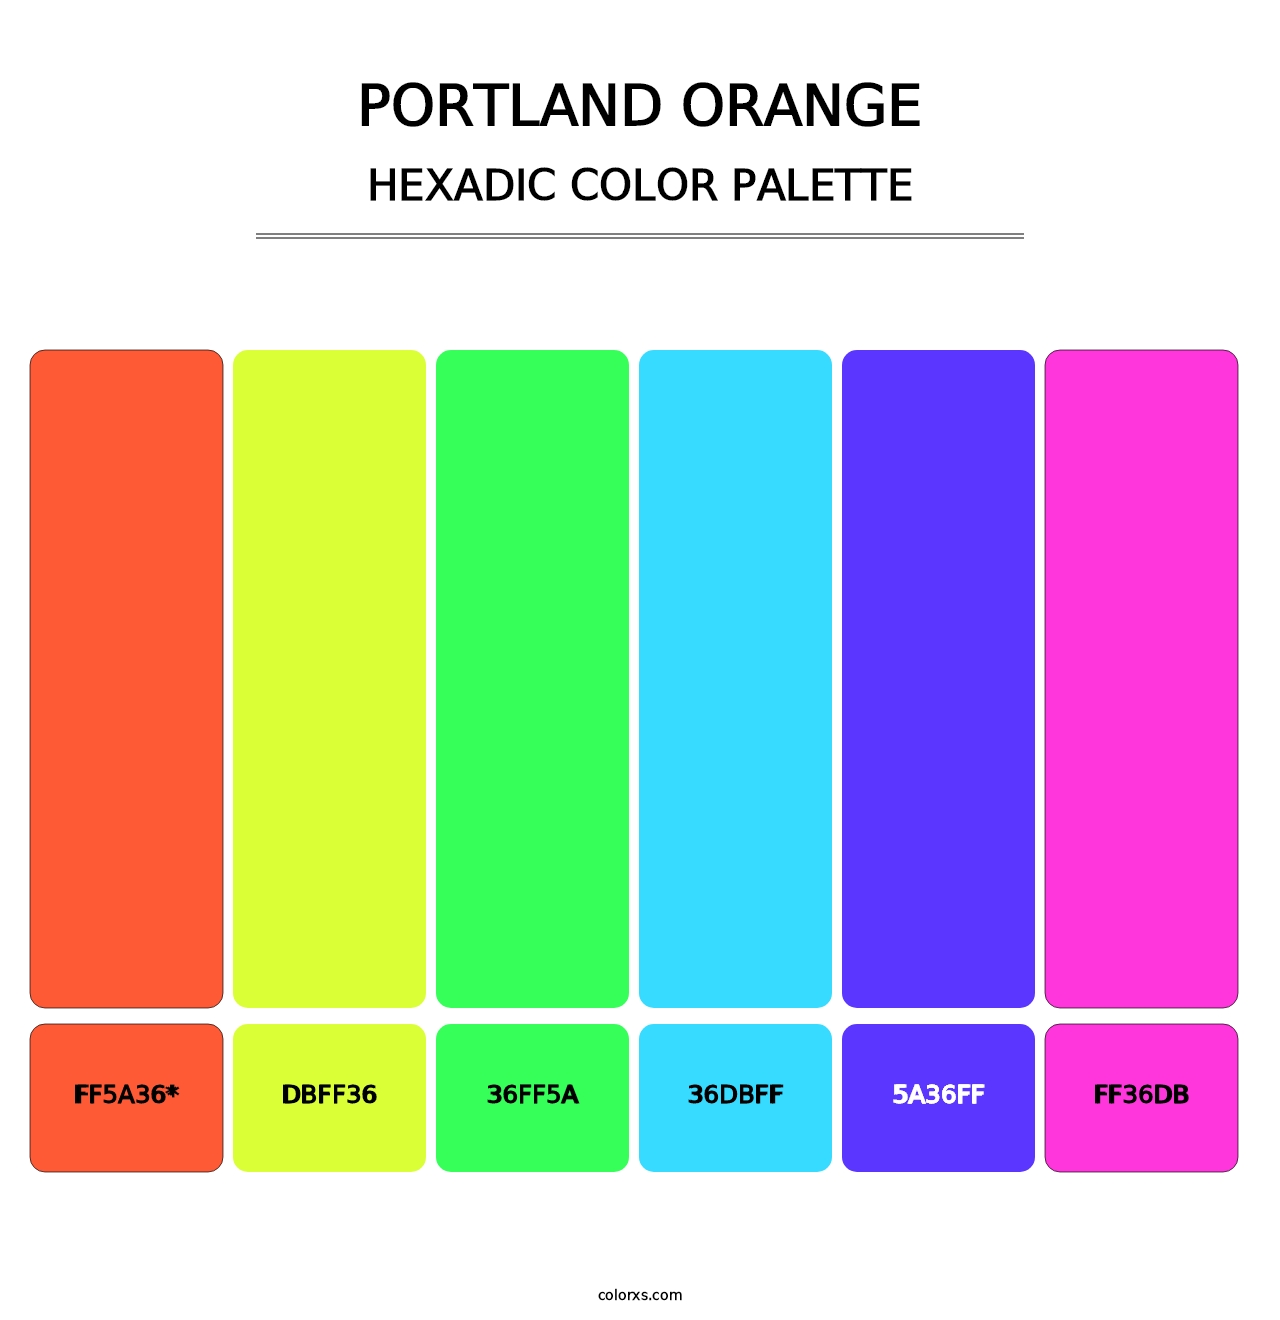 Portland Orange - Hexadic Color Palette